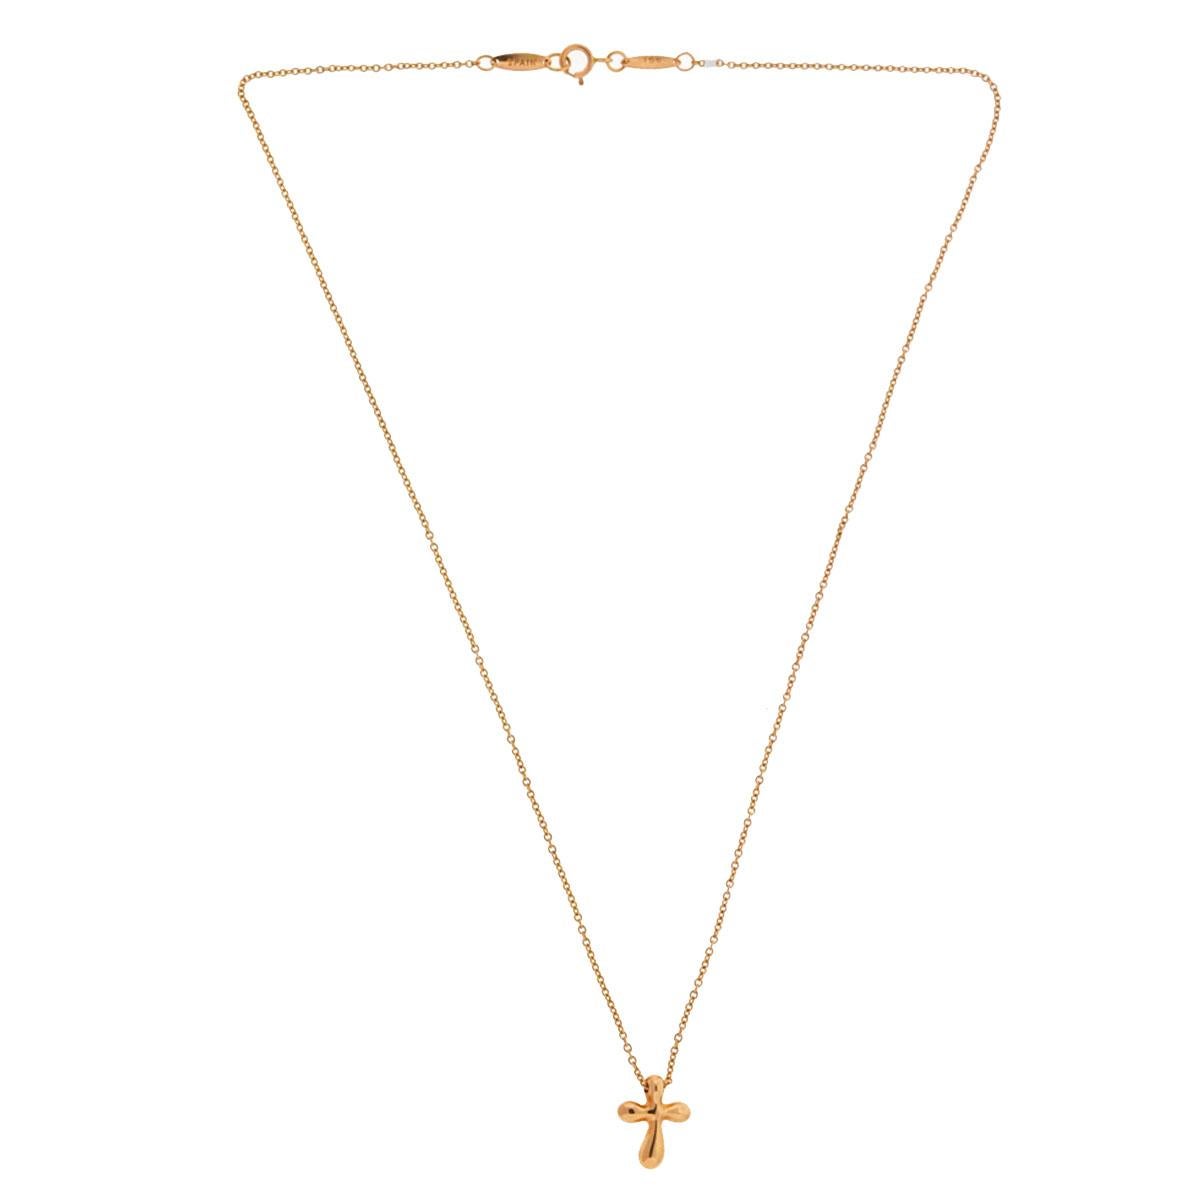 Company-Tiffany & Co
Style-Elsa Peretti Cross Pendant Necklace
Metal-18k Rose Gold
Chain Length-16